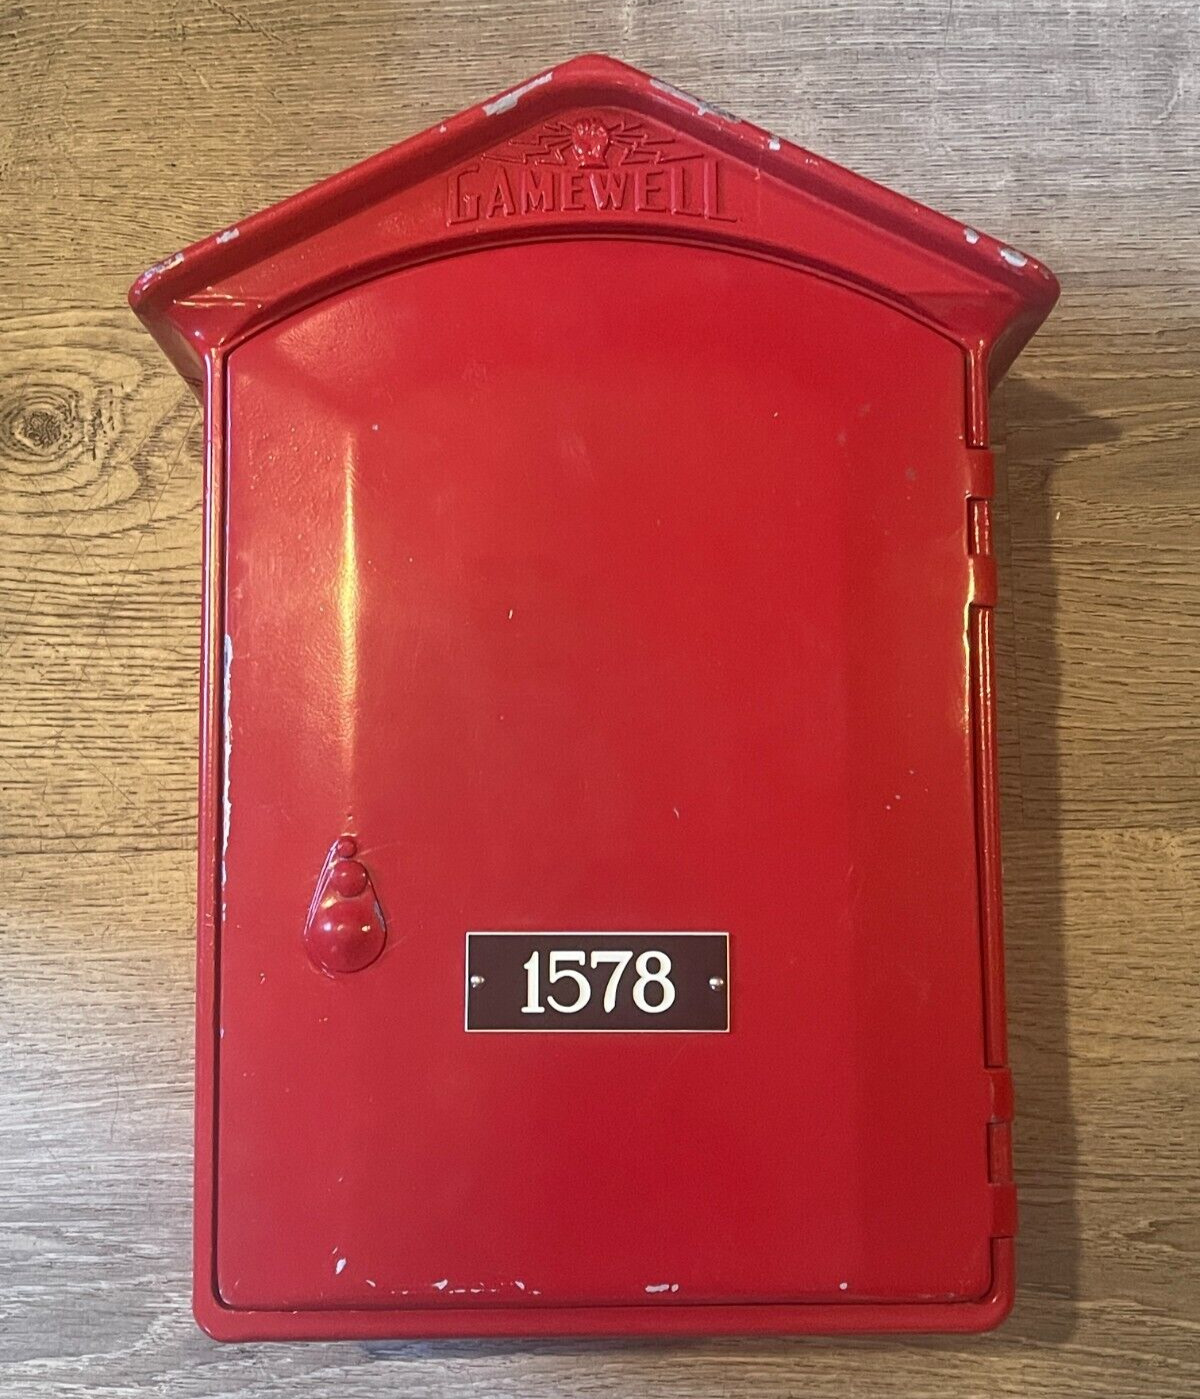 Gamewell Fire Alarm Master Box